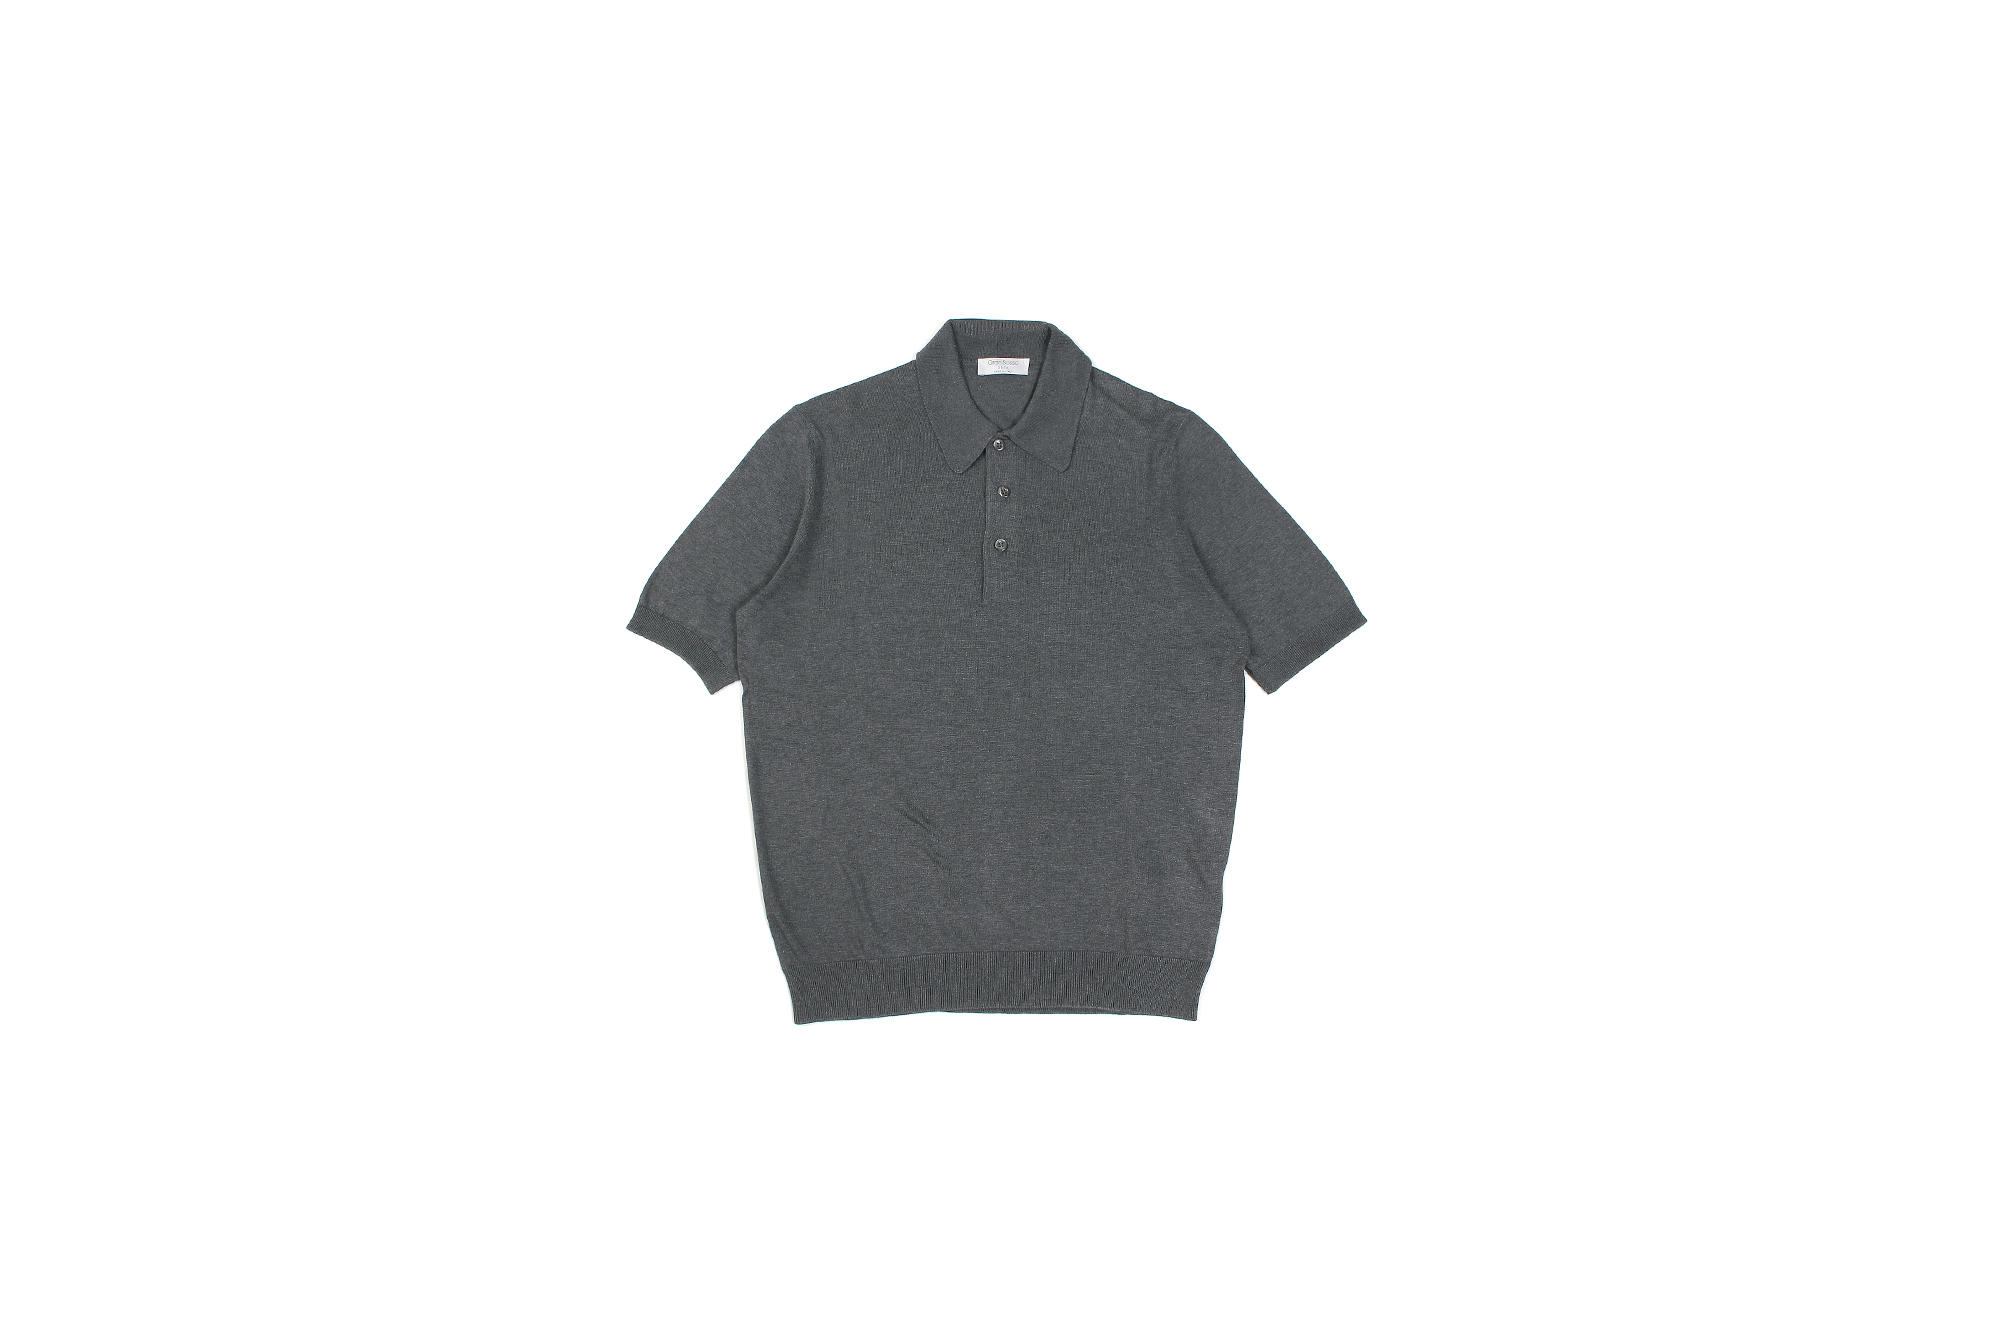 Gran Sasso (グランサッソ) Silk Knit Polo Shirt (シルクニットポロシャツ) SETA (シルク 100%) シルク ニット ポロシャツ GREY (グレー・097) made in italy (イタリア製) 2020 春夏新作 愛知 名古屋 altoediritto アルトエデリット 